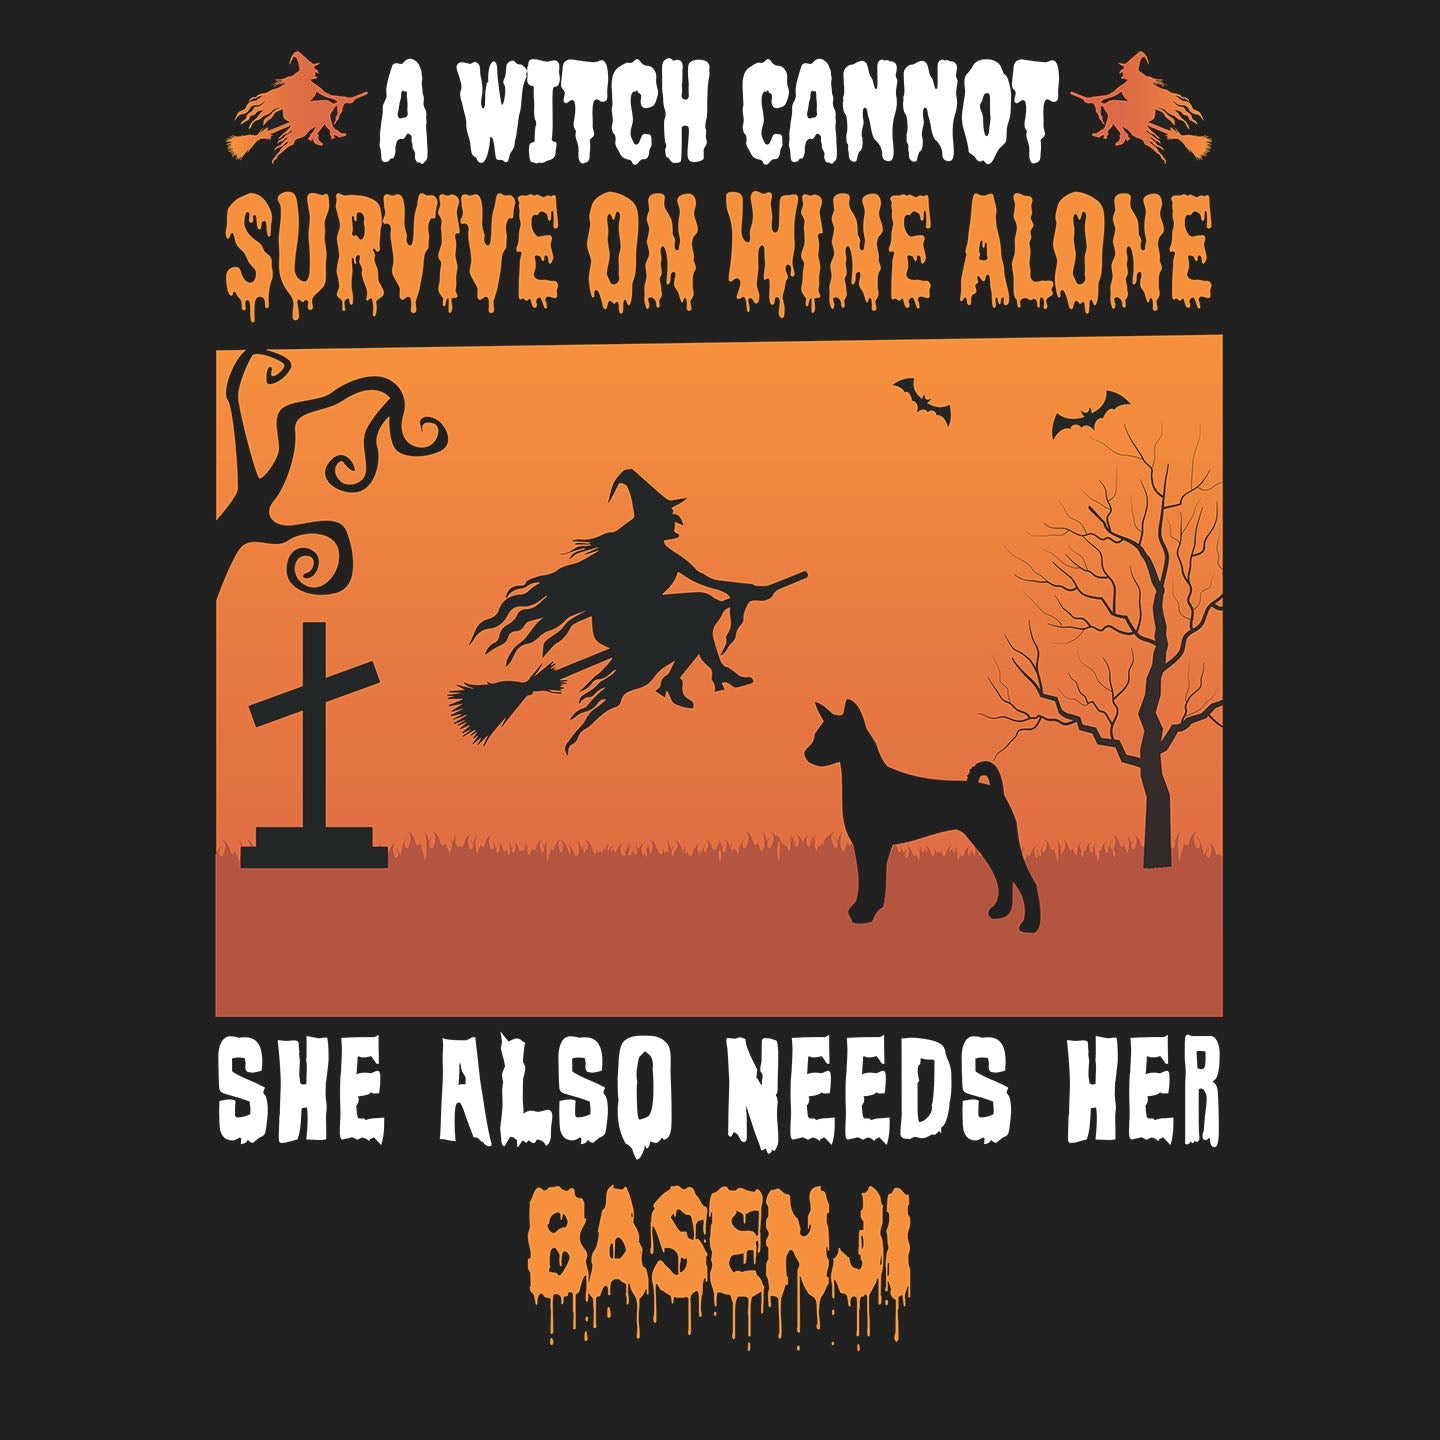 A Witch Needs Her Basenji - Women's V-Neck T-Shirt